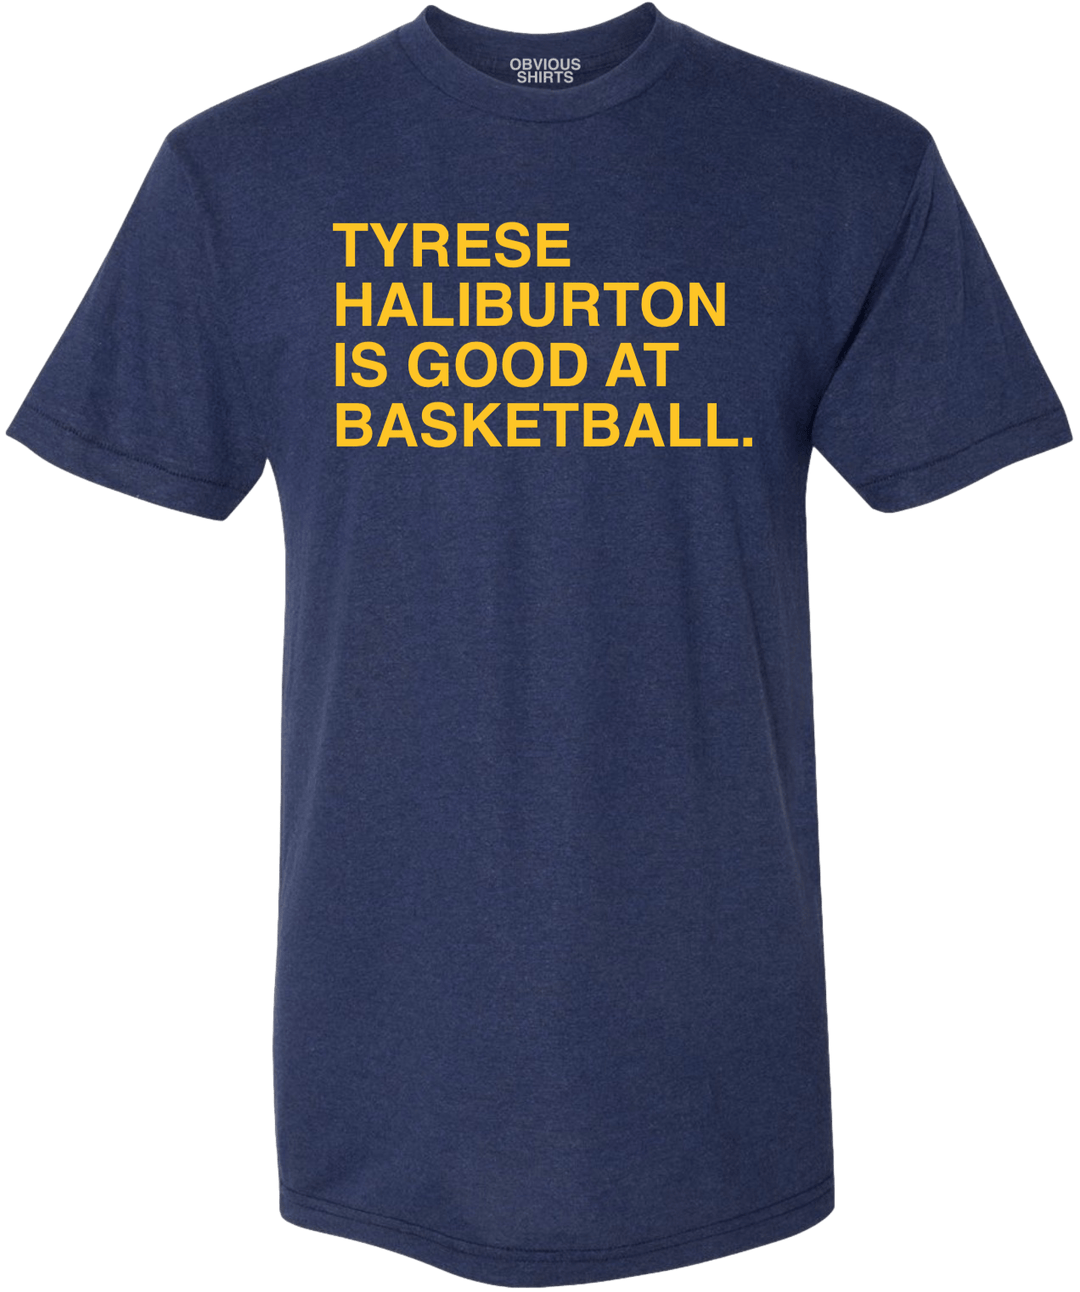 TYRESE HALIBURTON IS GOOD AT BASKETBALL. - OBVIOUS SHIRTS